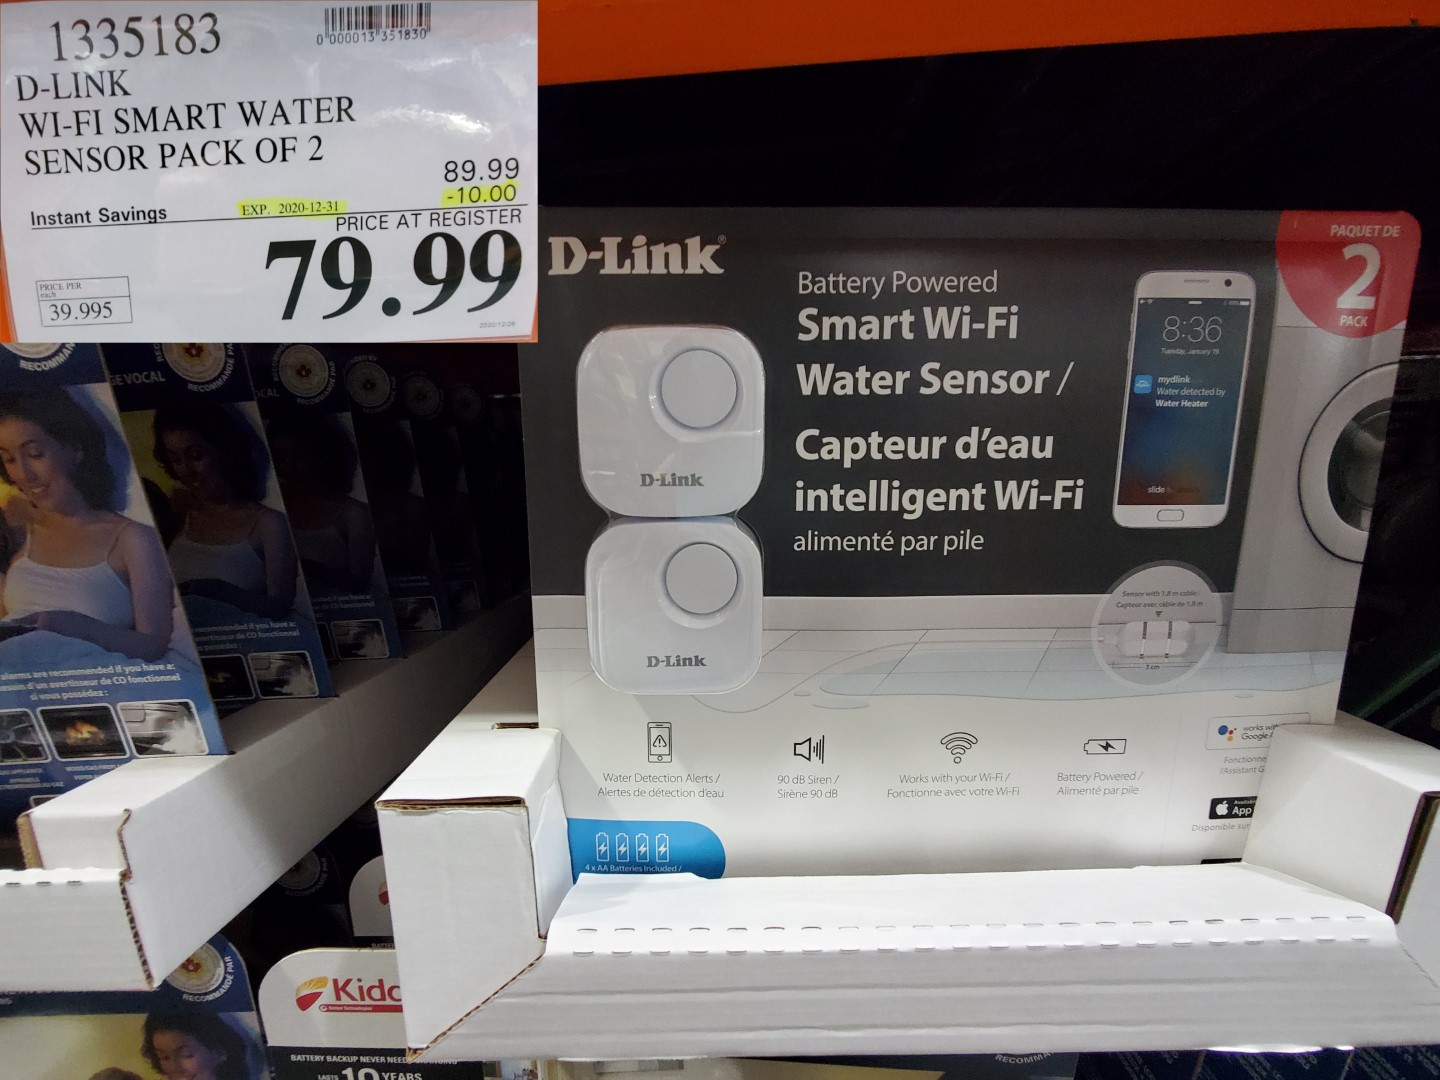 d-link smart wi-fi water sensor